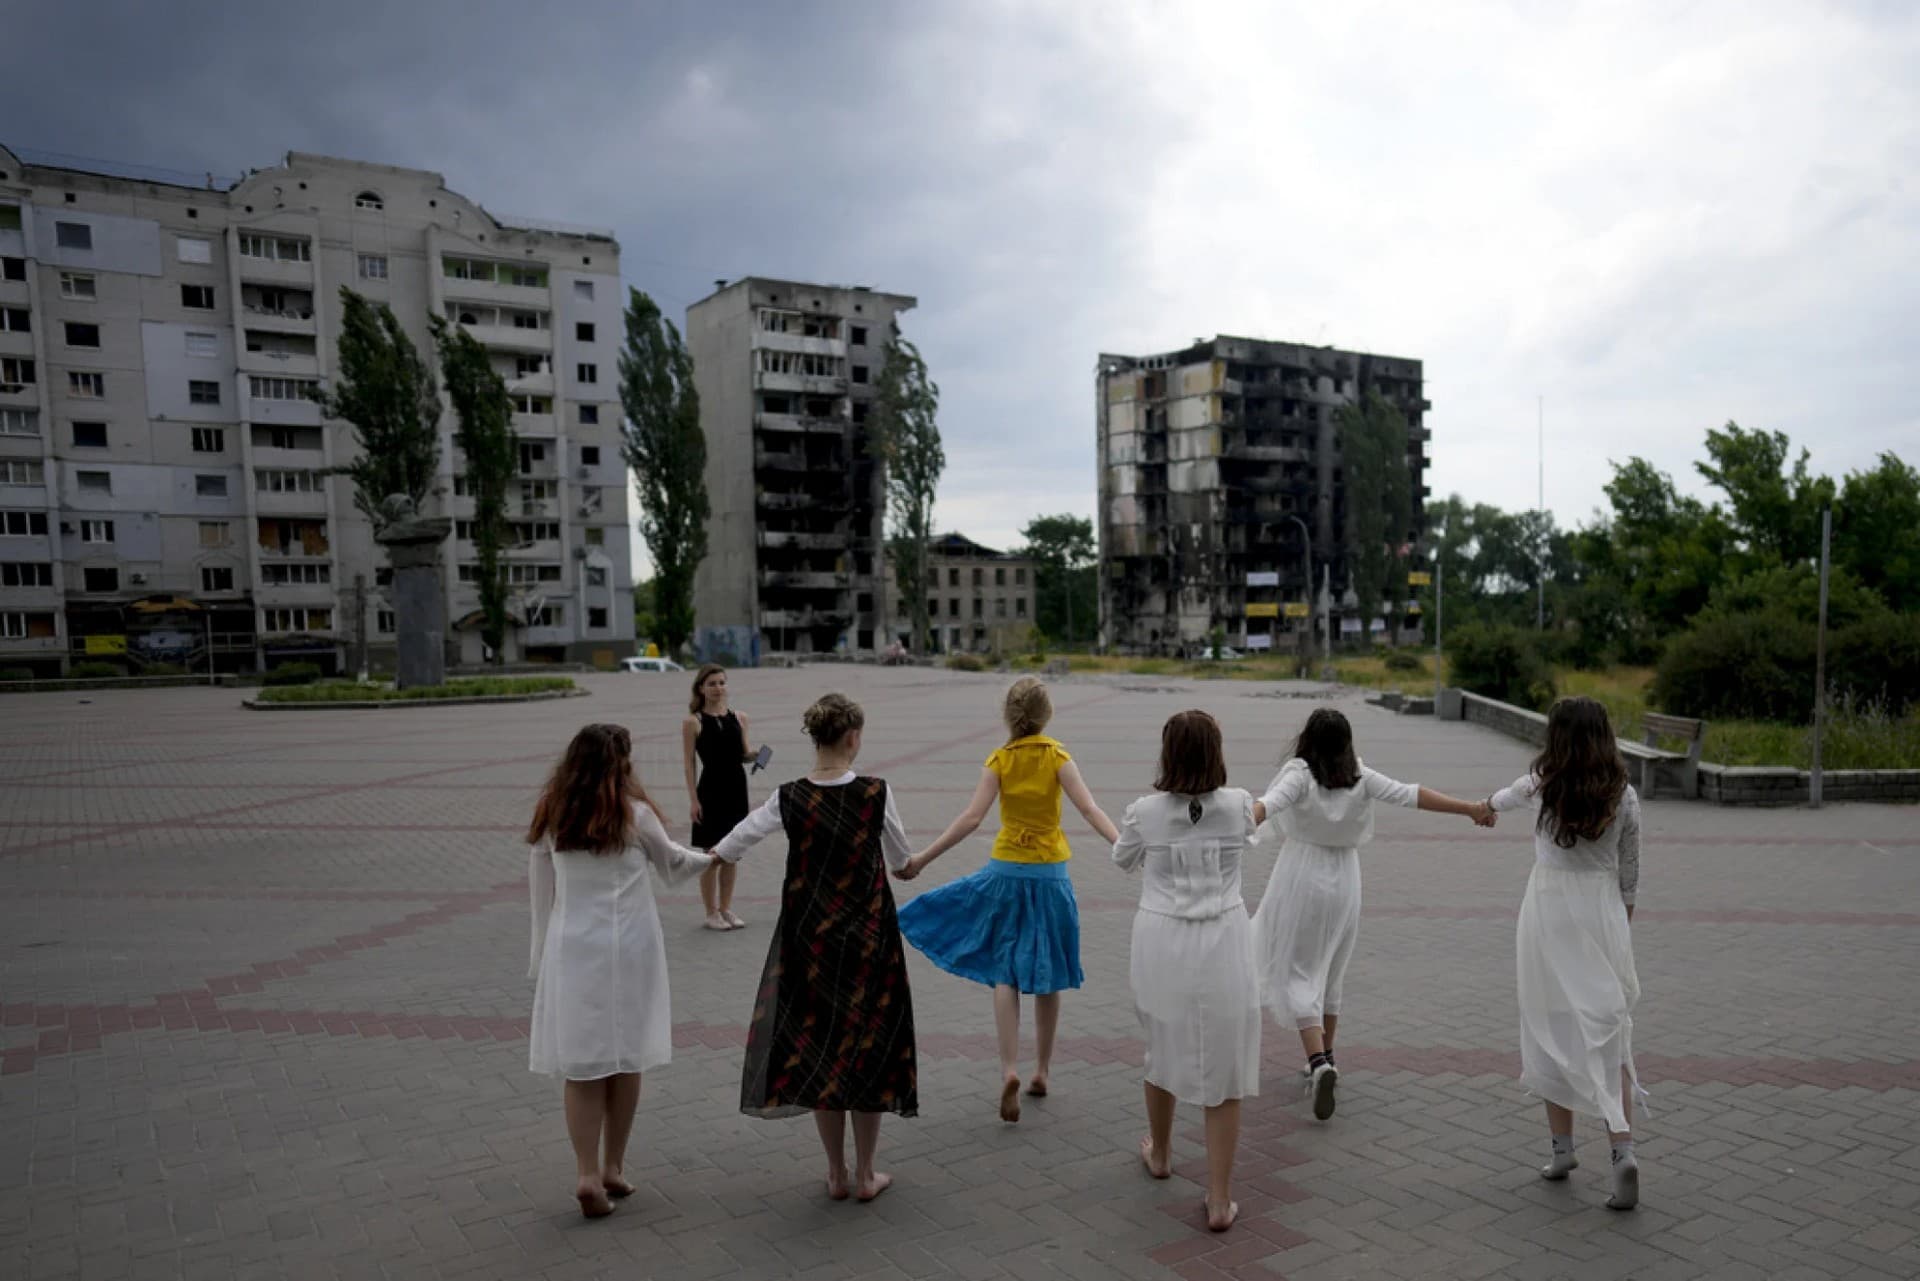 Girls dance near a building destroyed in Russian attacks, in Borodyanka